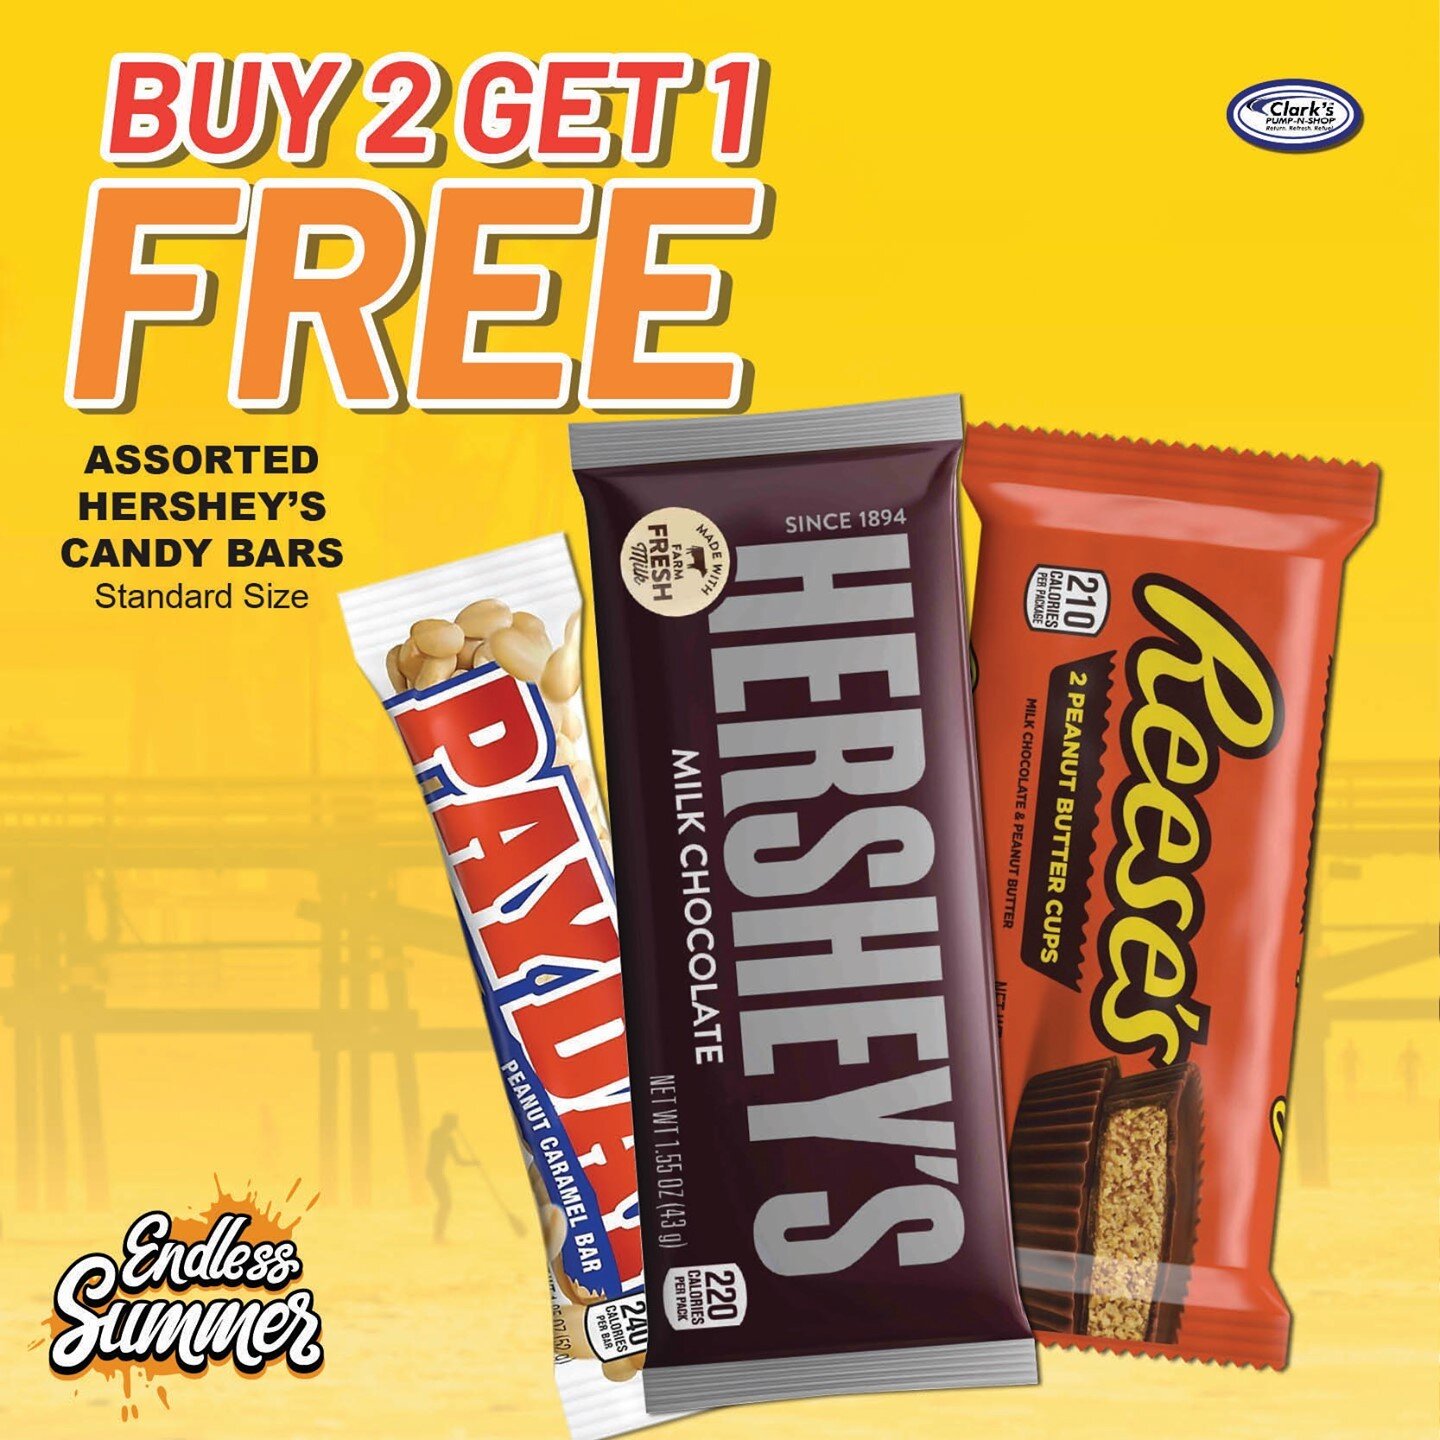 Assorted Hershey's Candy Bars Standard Size Buy 2 Get 1 FREE #ReturnRefreshRefeul